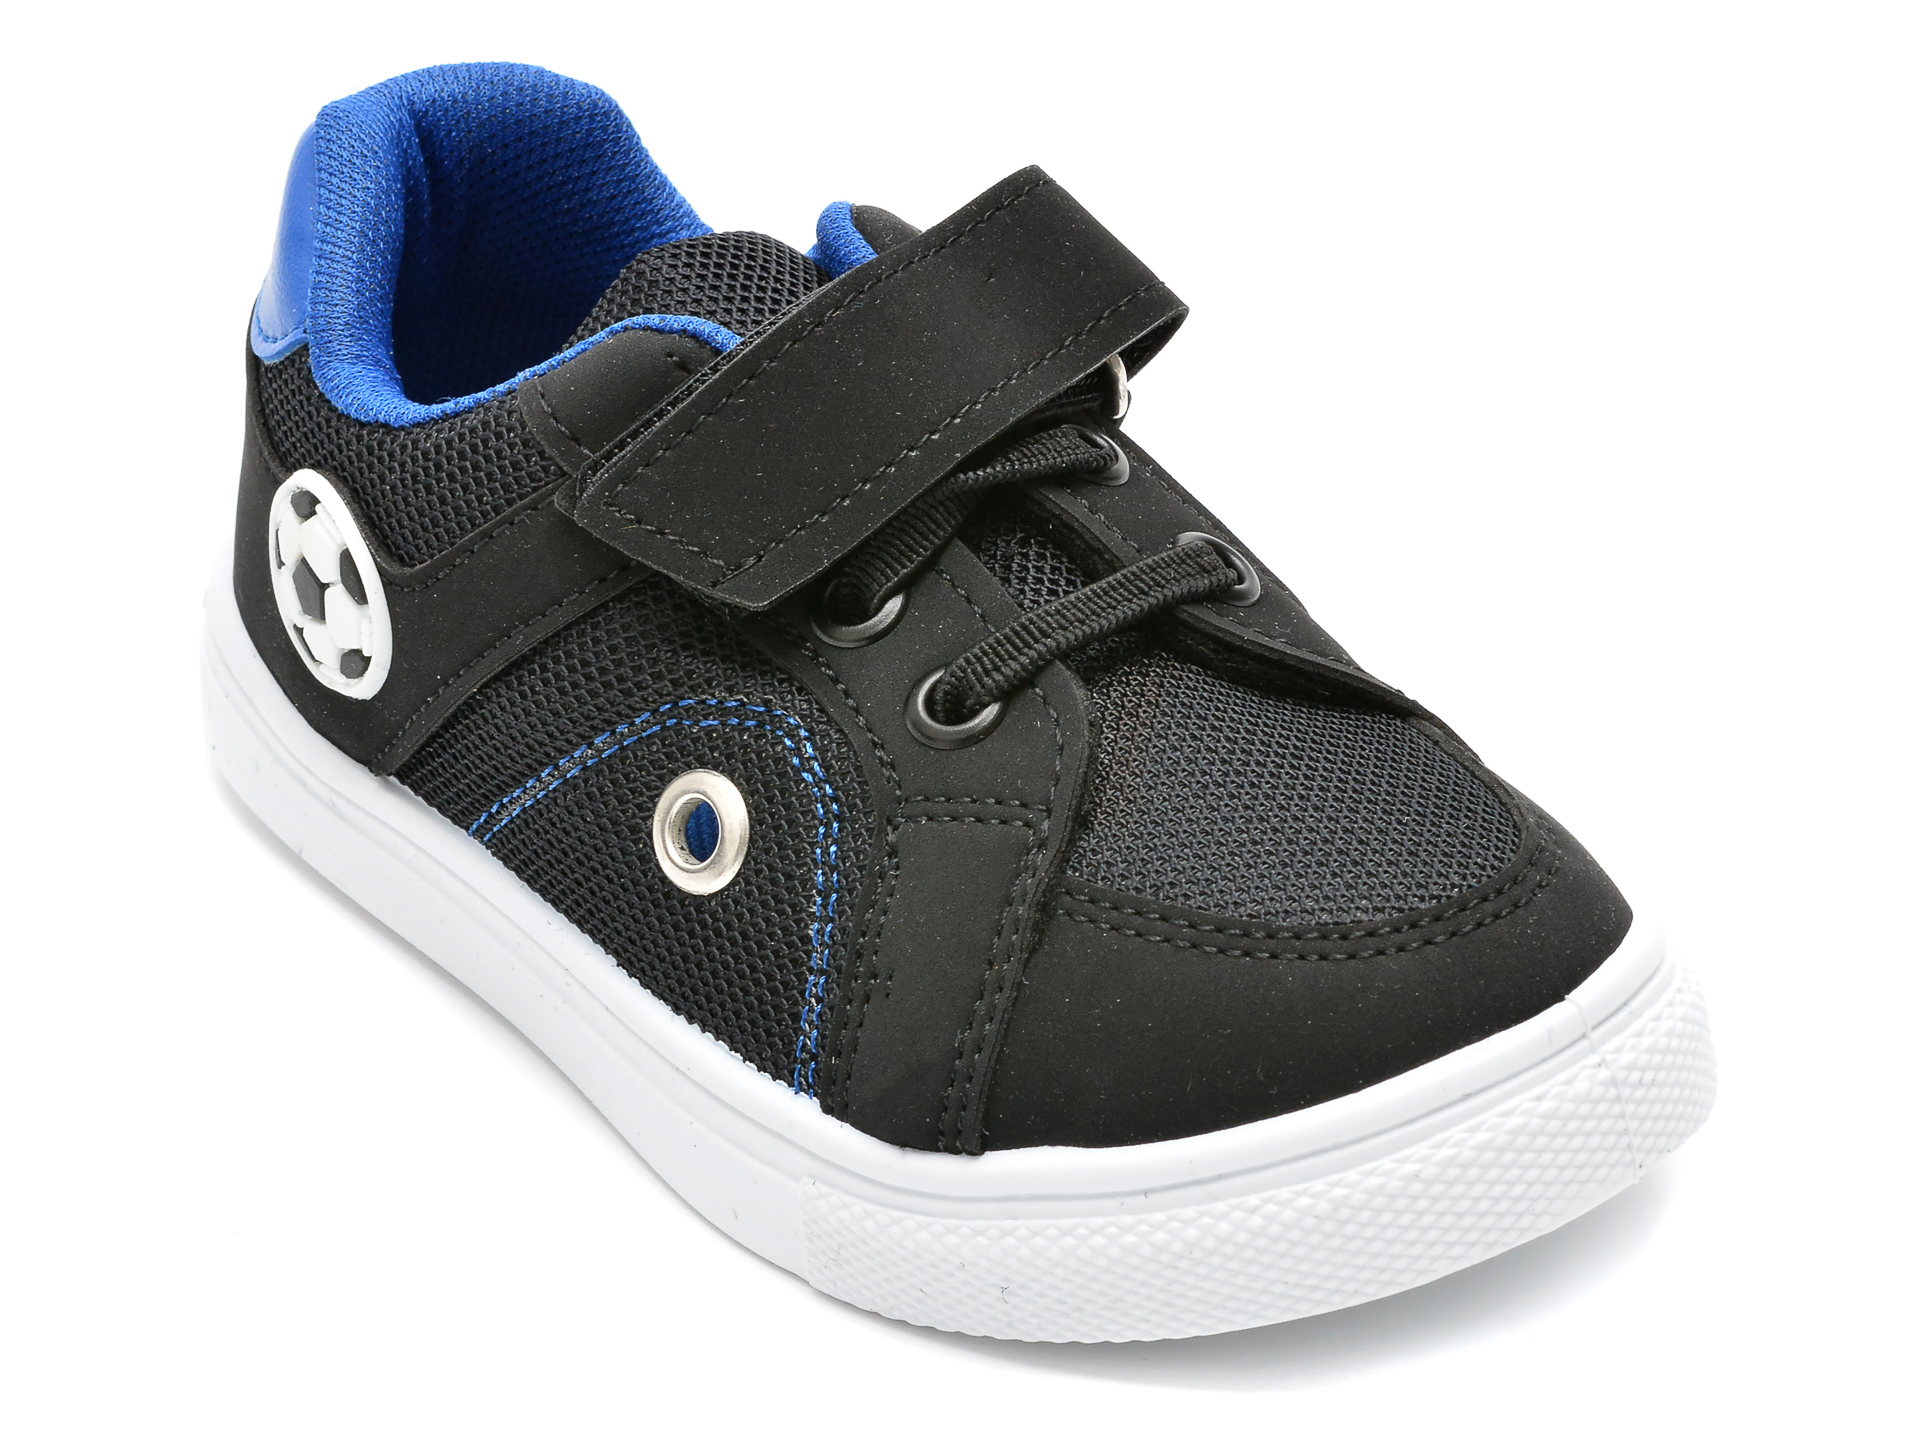 Pantofi sport POLARIS negri, 520138, din material textil si piele ecologica /copii/incaltaminte